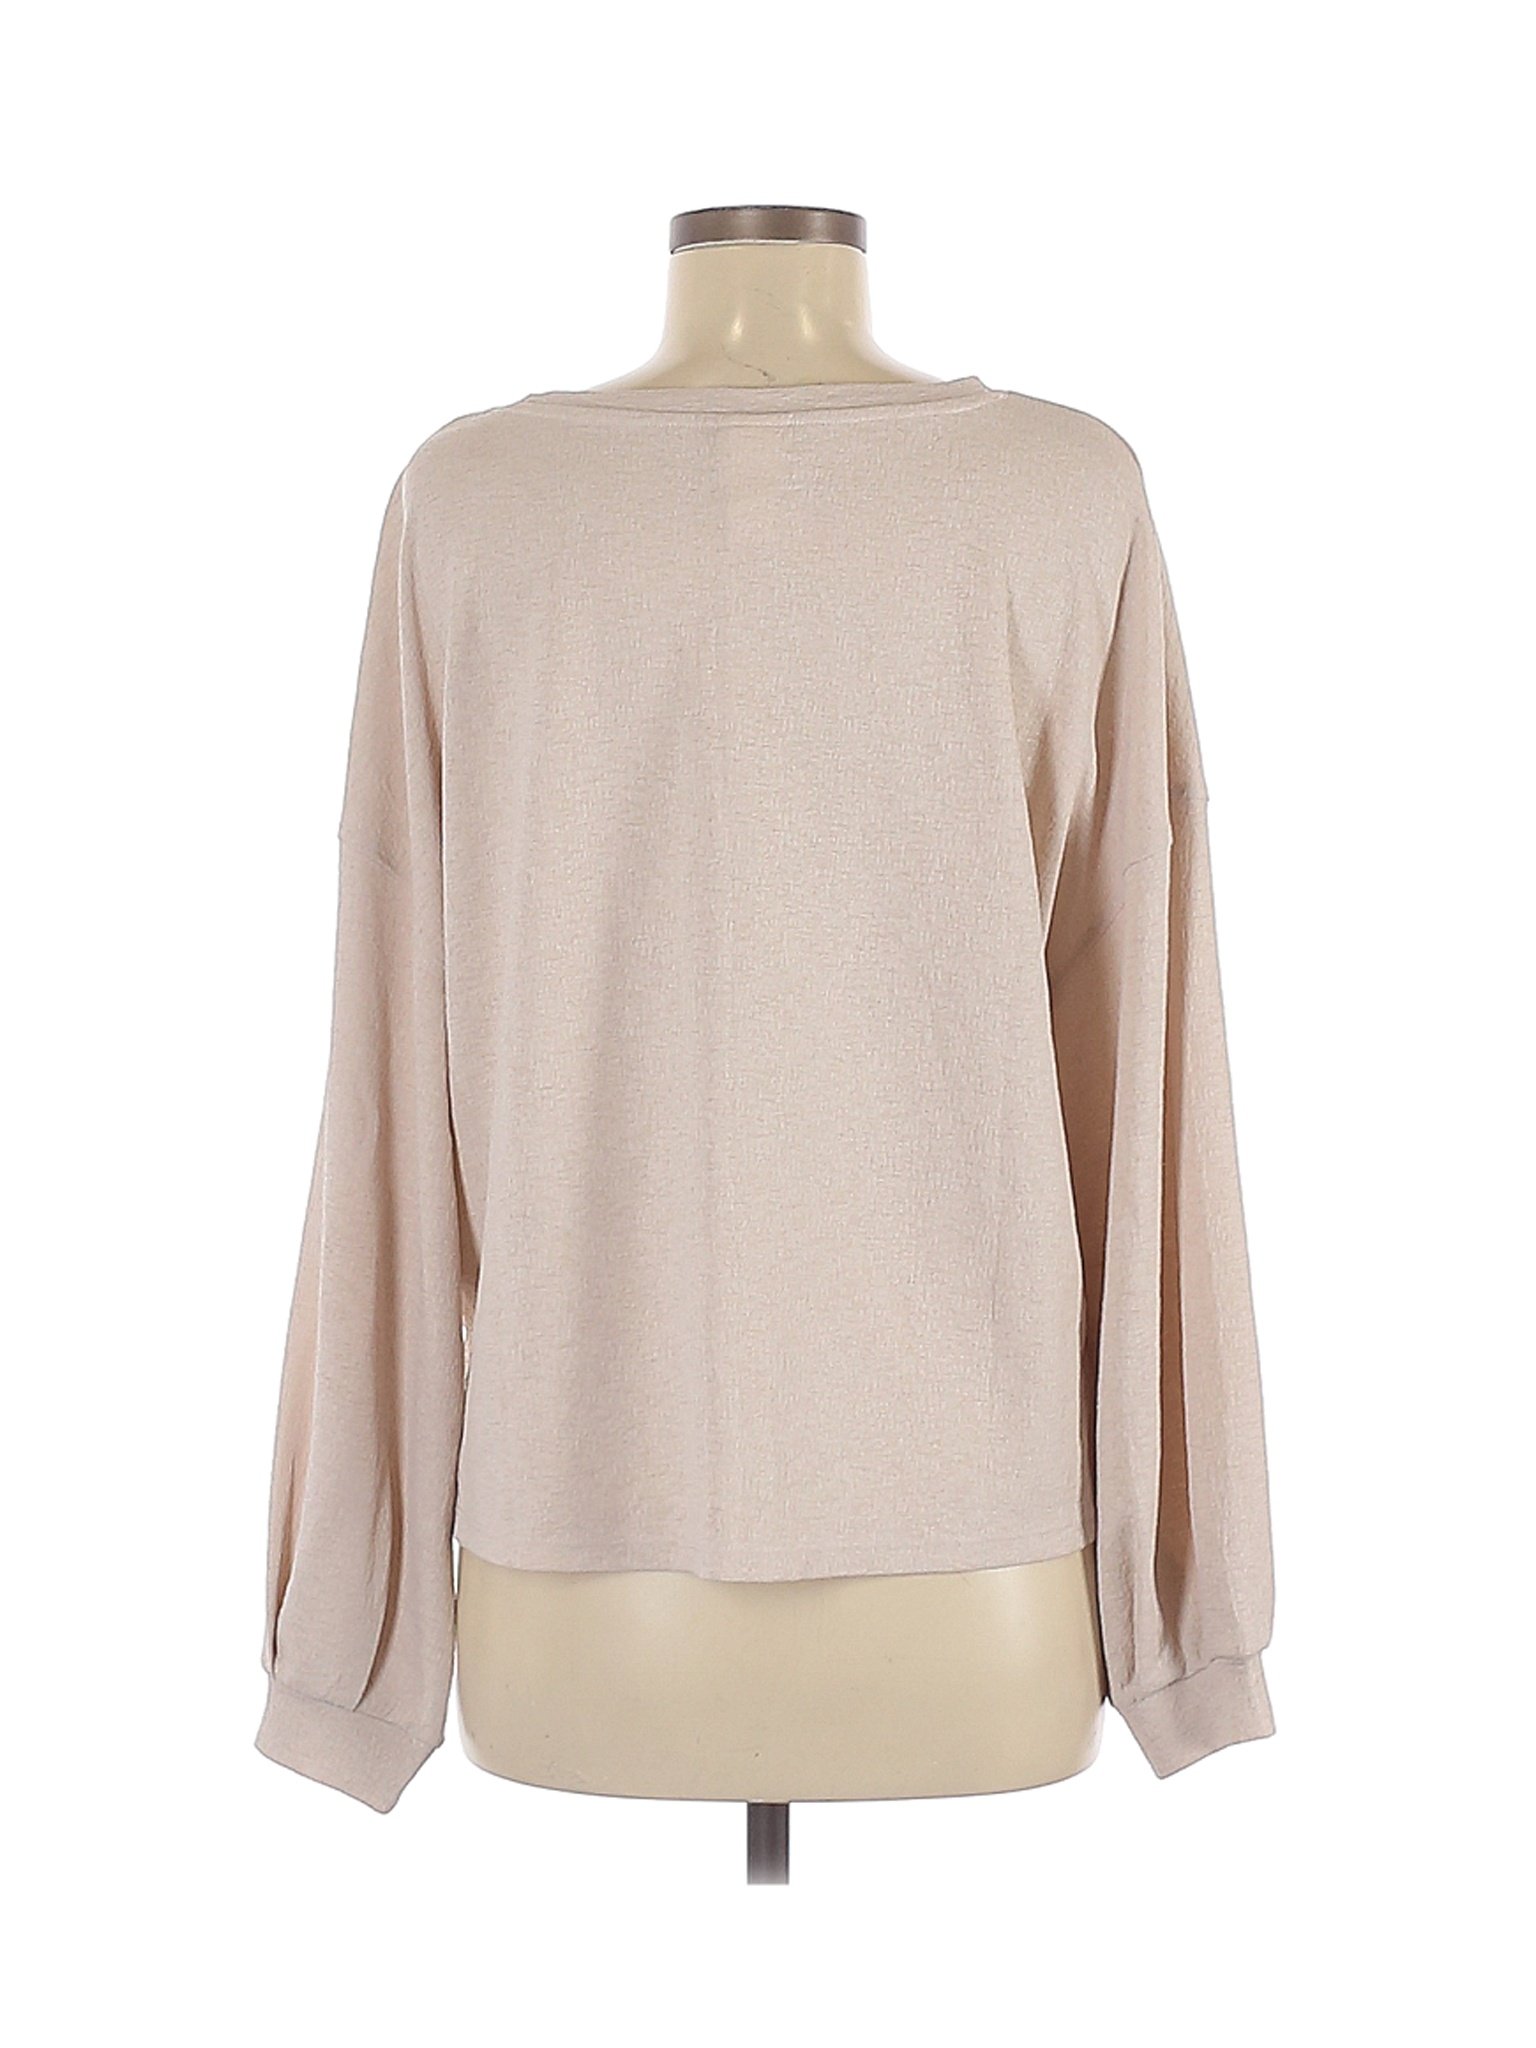 H&M Women Brown Long Sleeve Top M | eBay